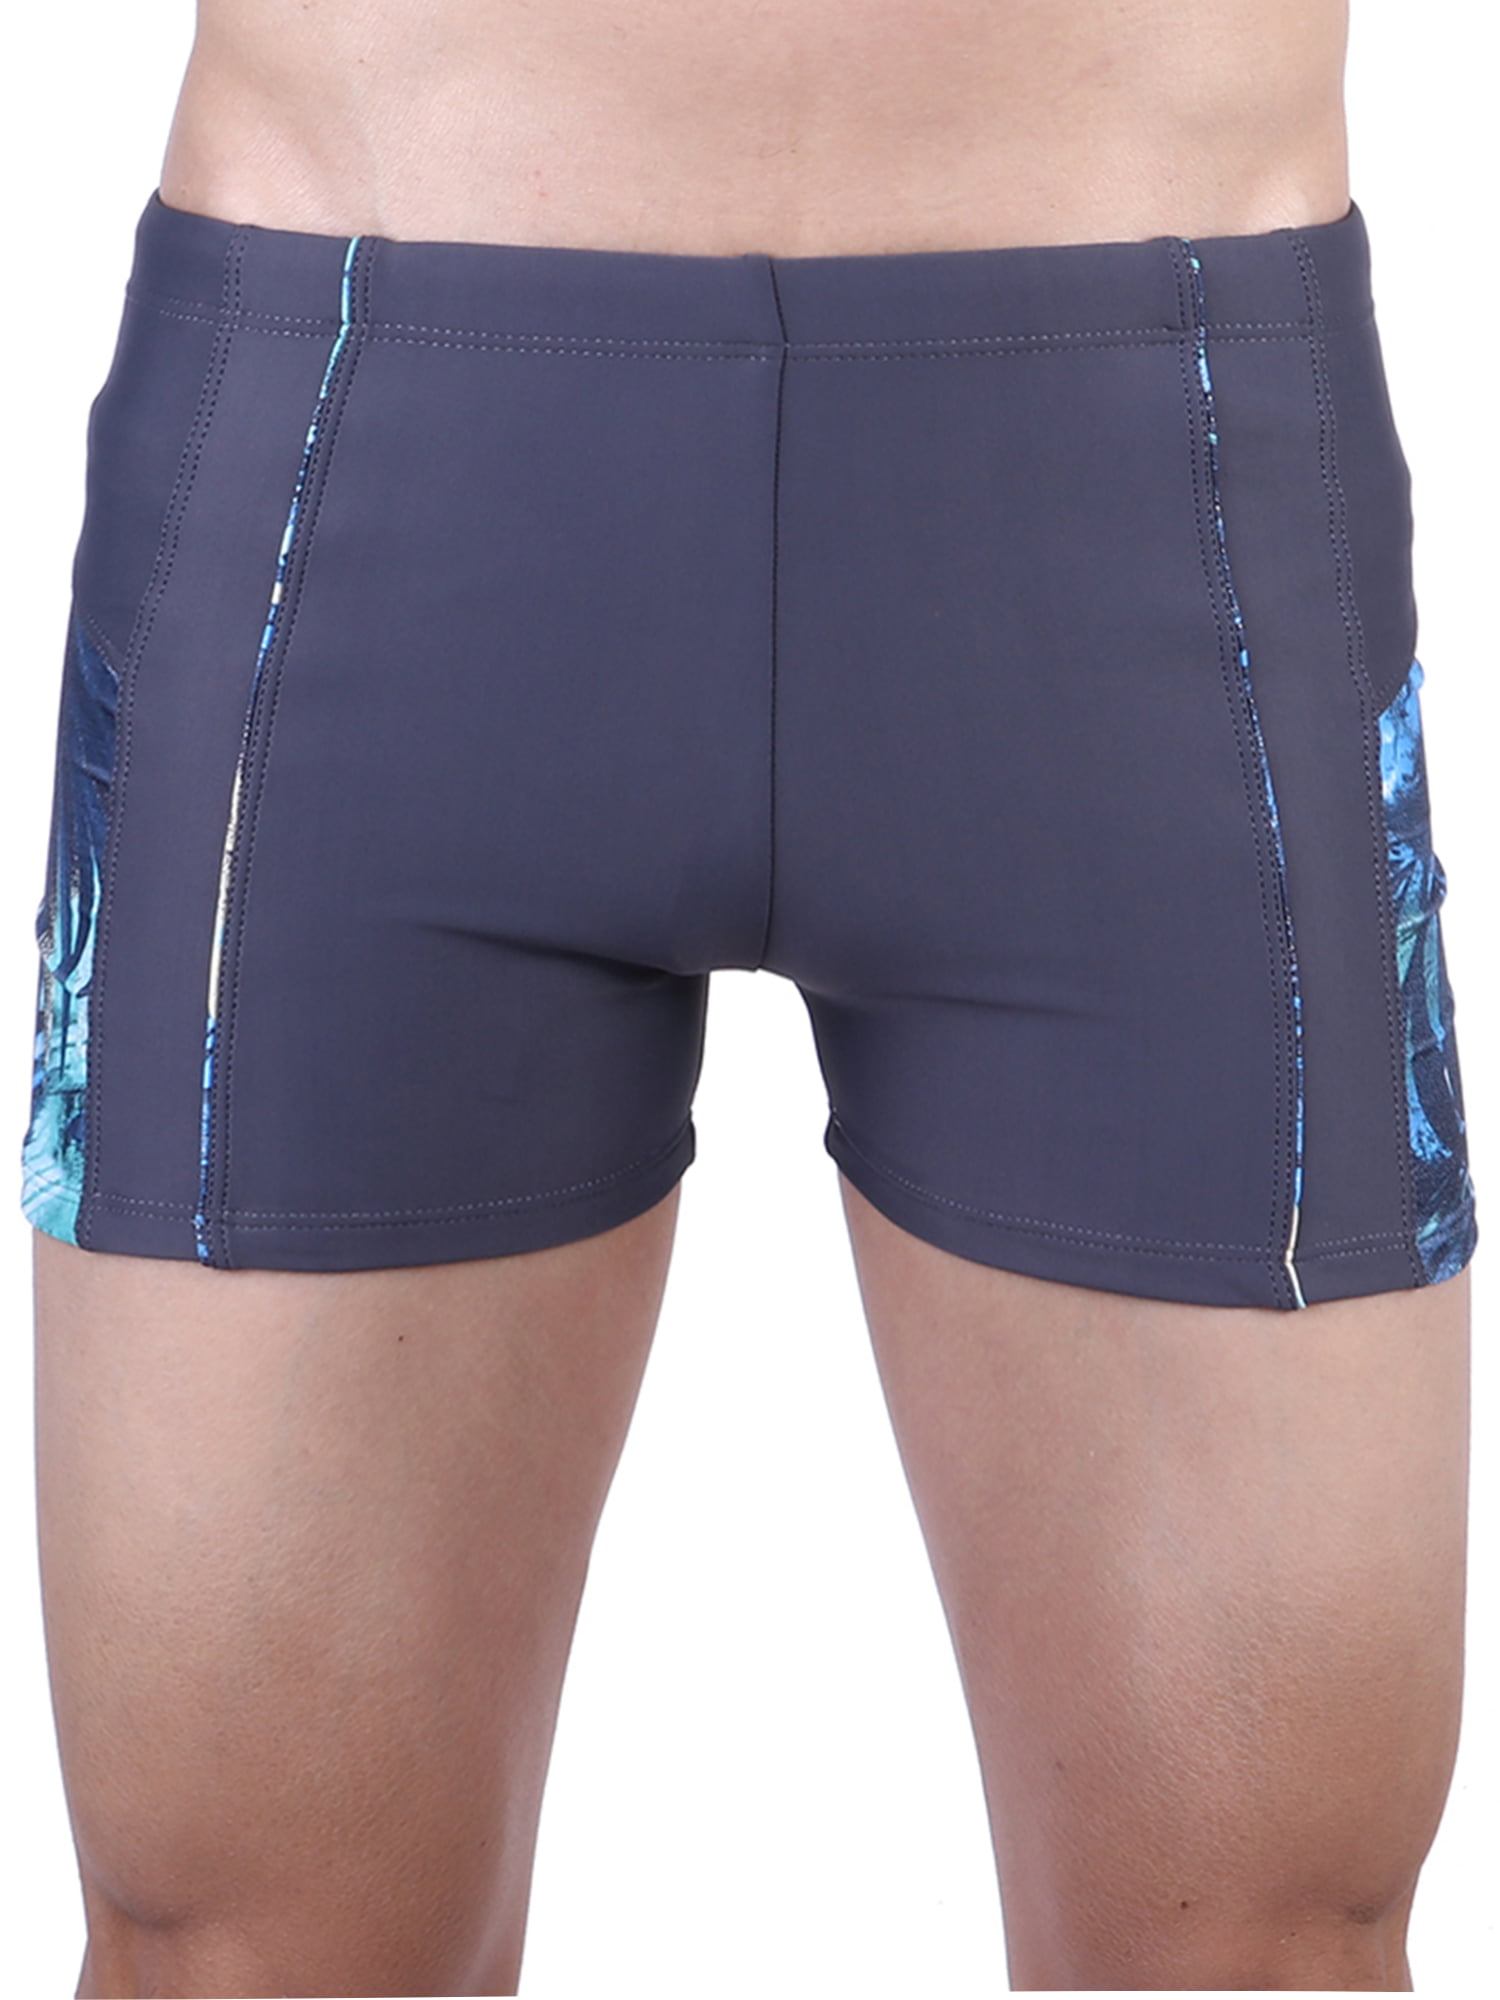 New Men's Lycra Swim Swimming Trunks Professional Swimwear Shorts Size S-XXXL 